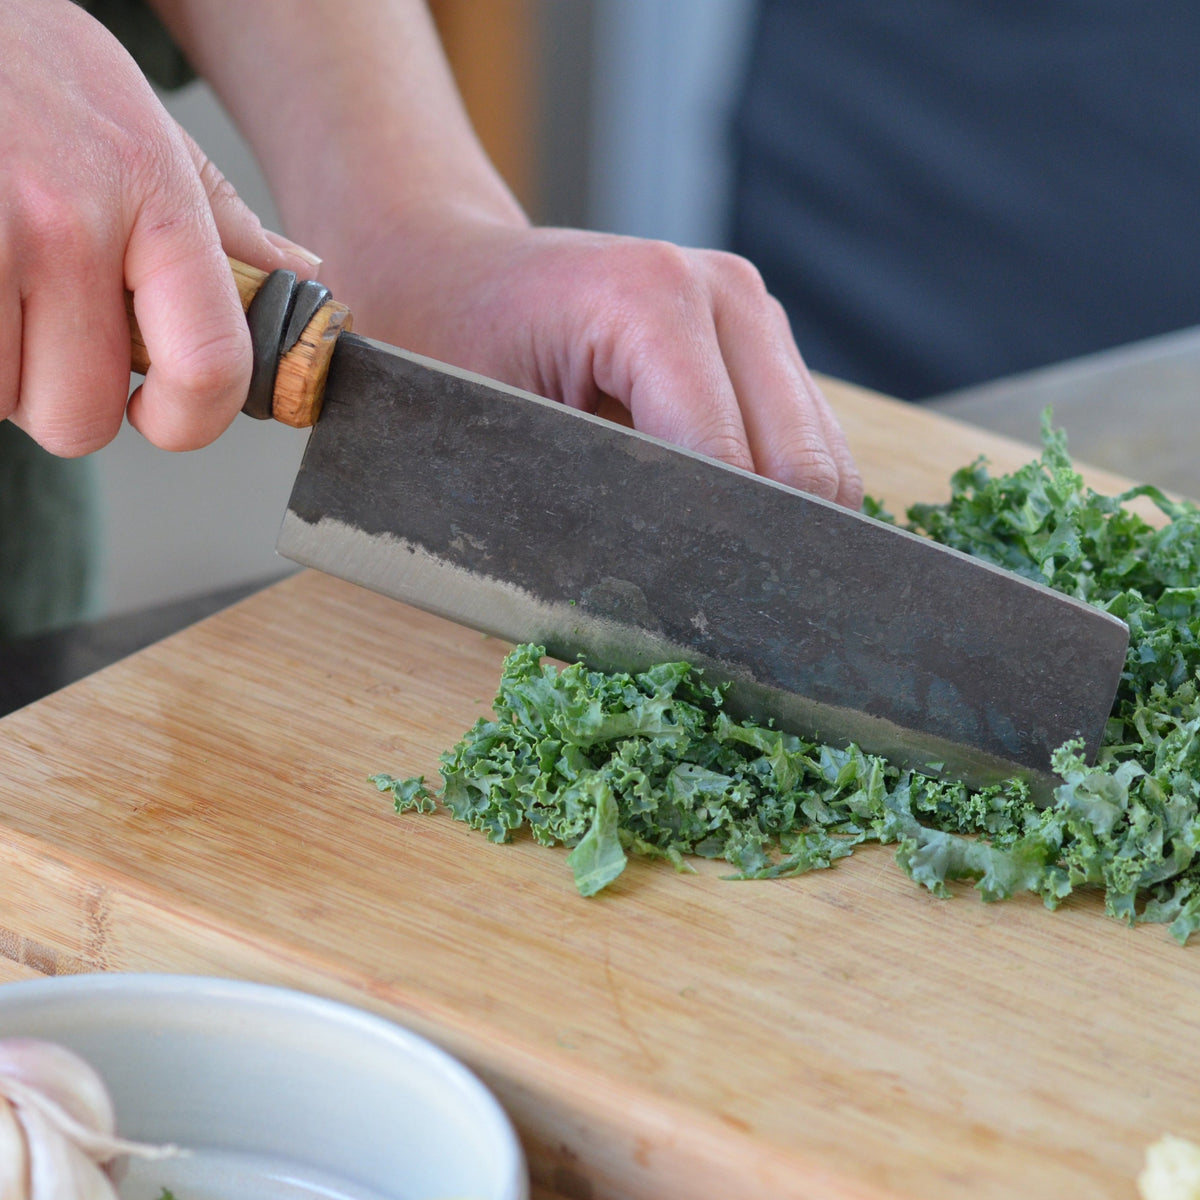 Master Shin's Anvil, #63 Vegetable Knife, lifestyle photo of chopping kale